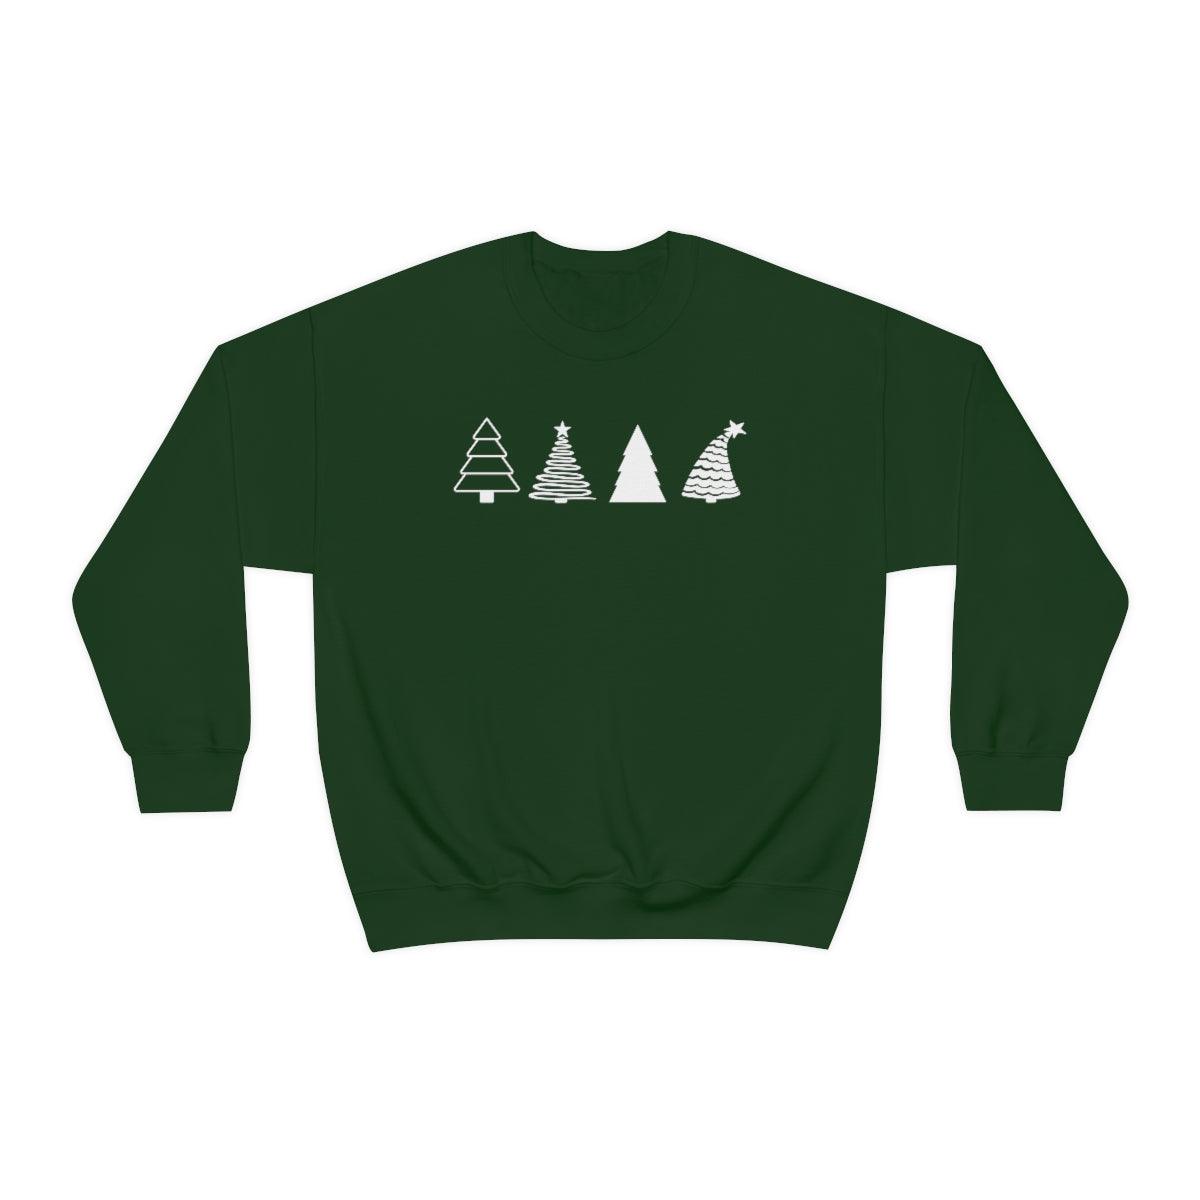 Christmas Trees Christmas Crewneck Sweater - Crystal Rose Design Co.